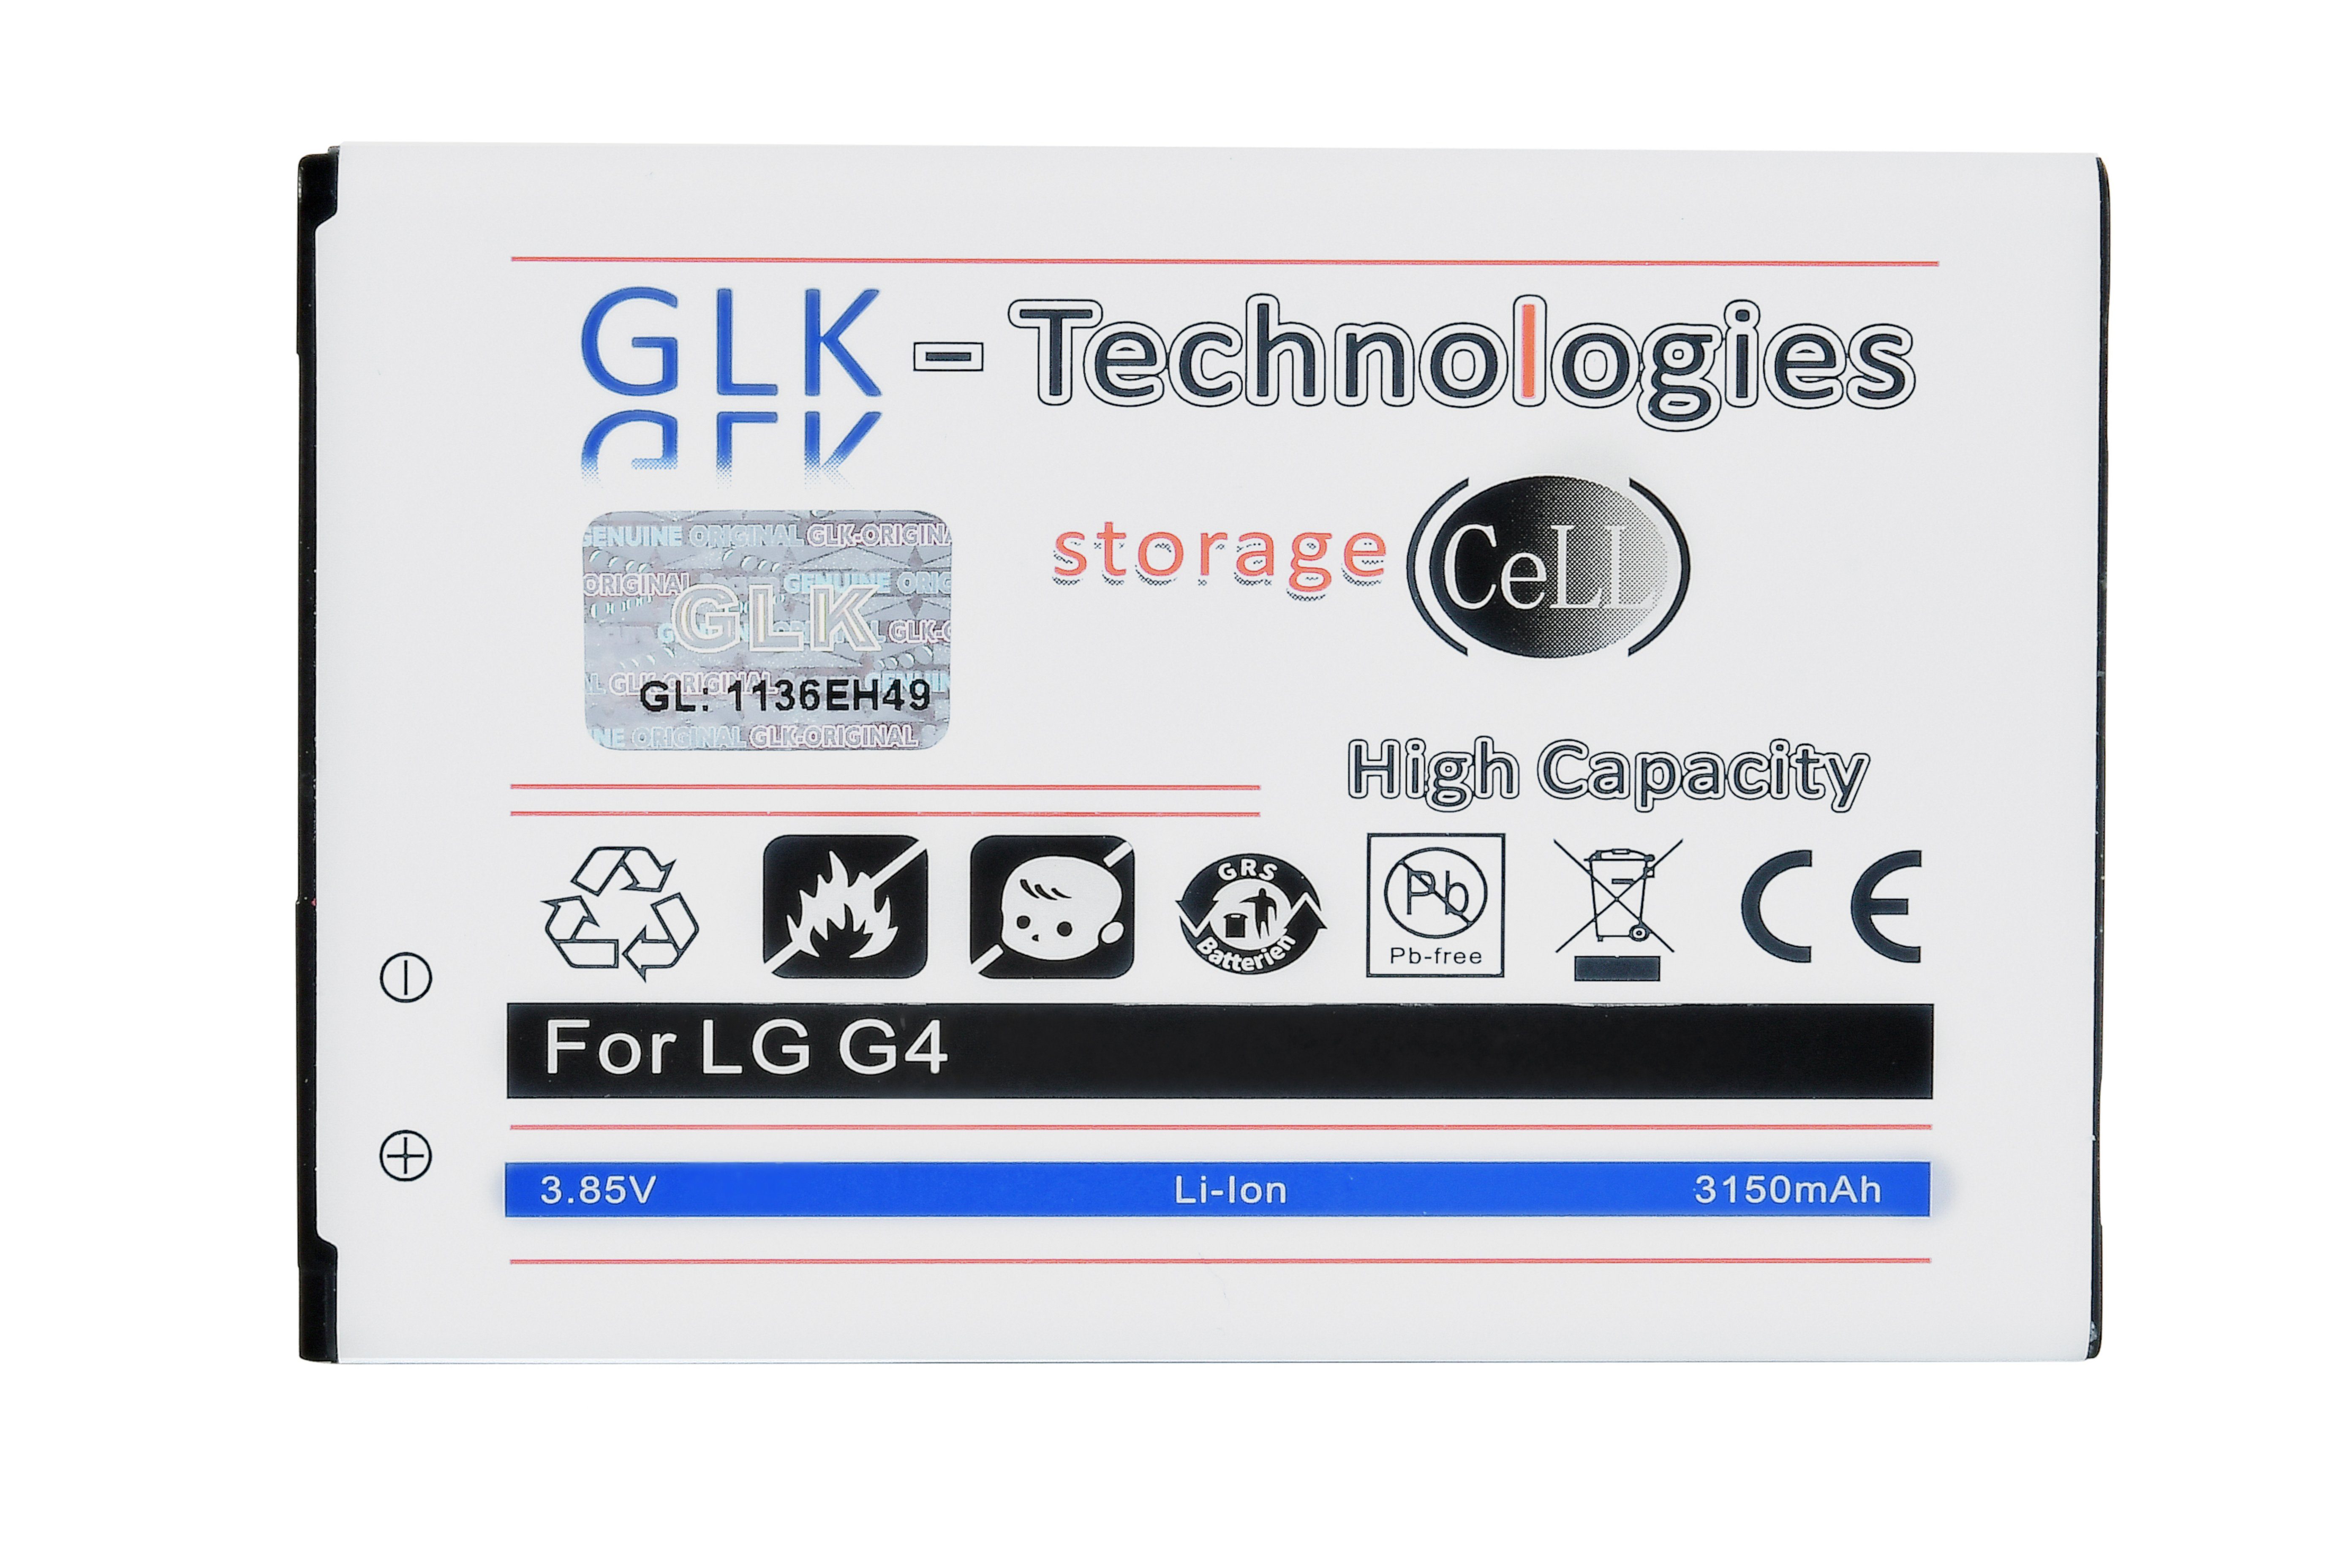 GLK-Technologies High Power Ersatzakku für H815 SIM G4 Stylus BL-51YF, Dual (3.8 H635 Neu 3150 // Battery, Original Ersetzt LG 3150mAh Smartphone-Akku G4 H818P GLK-Technologies accu, Akku mAh V)